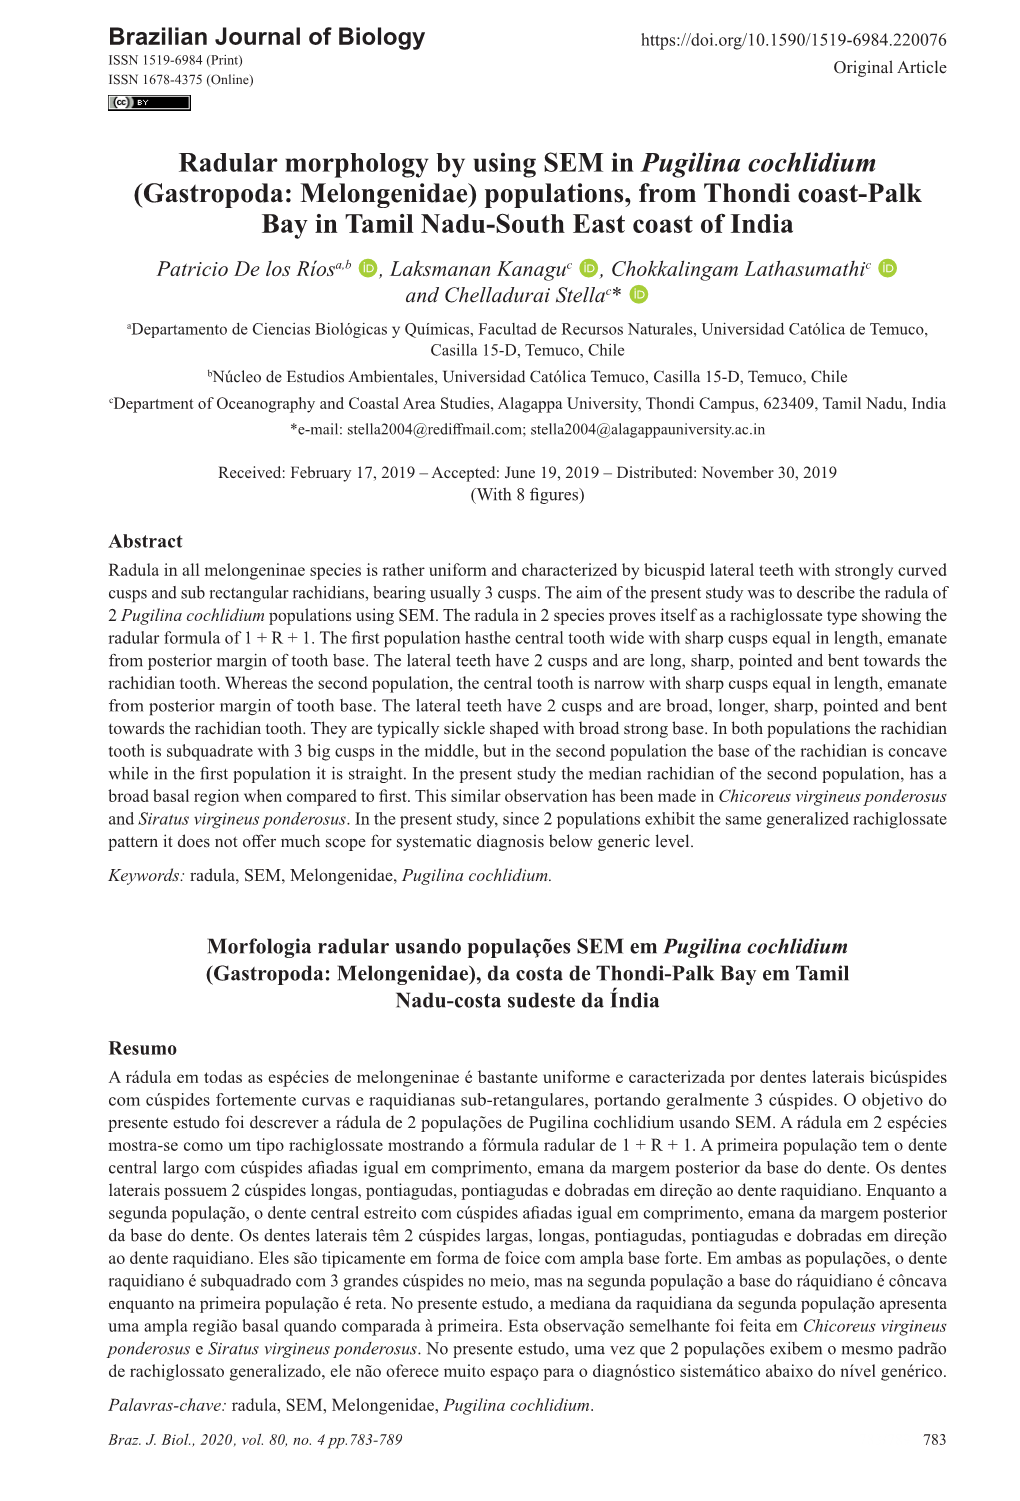 Radular Morphology by Using SEM in Pugilina Cochlidium (Gastropoda